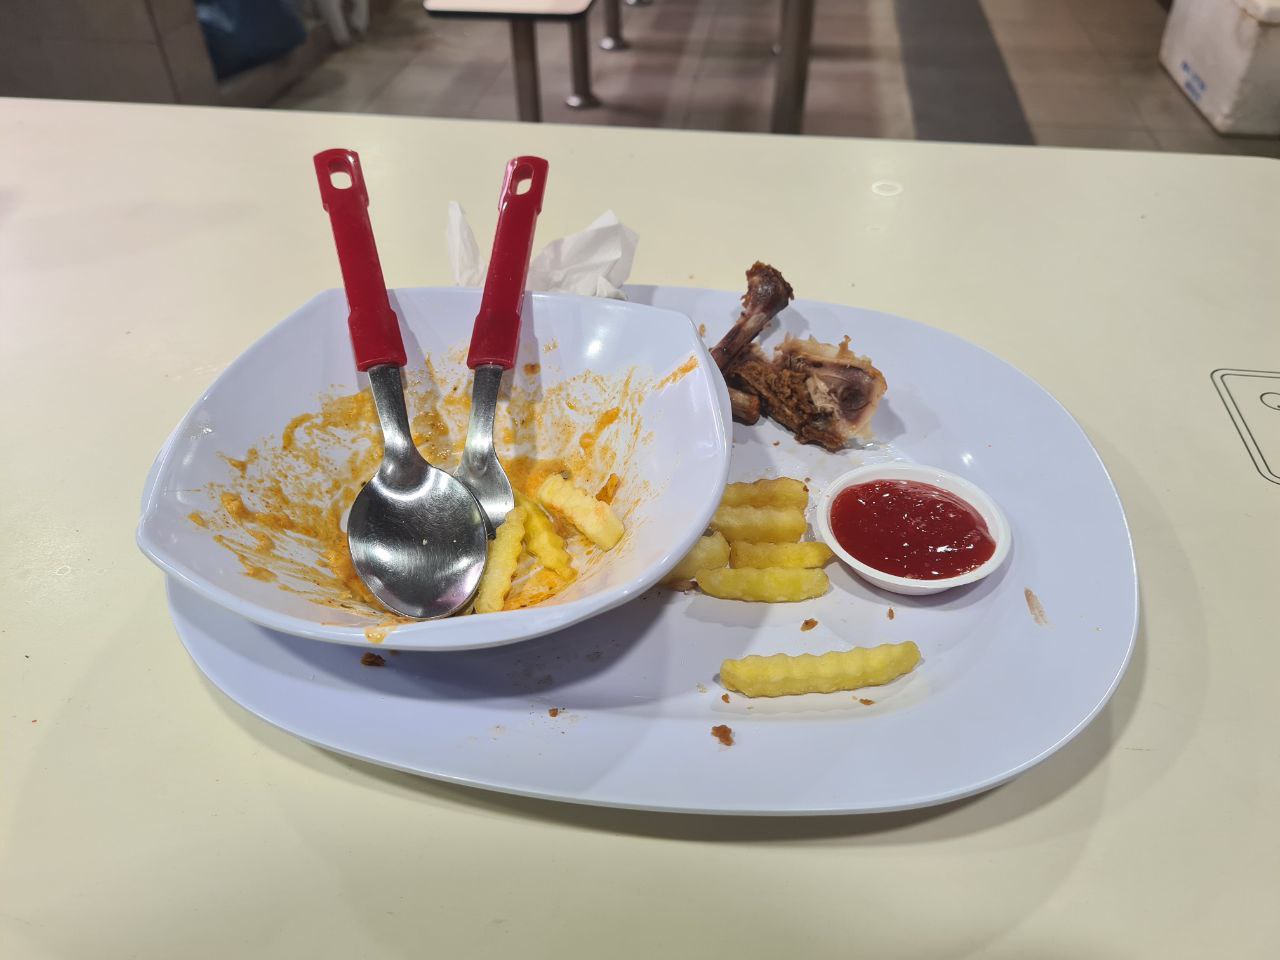 All Bout Chicken - Chicken Mac Spicy & 2 Piece Chicken Meal with 2 regular sides